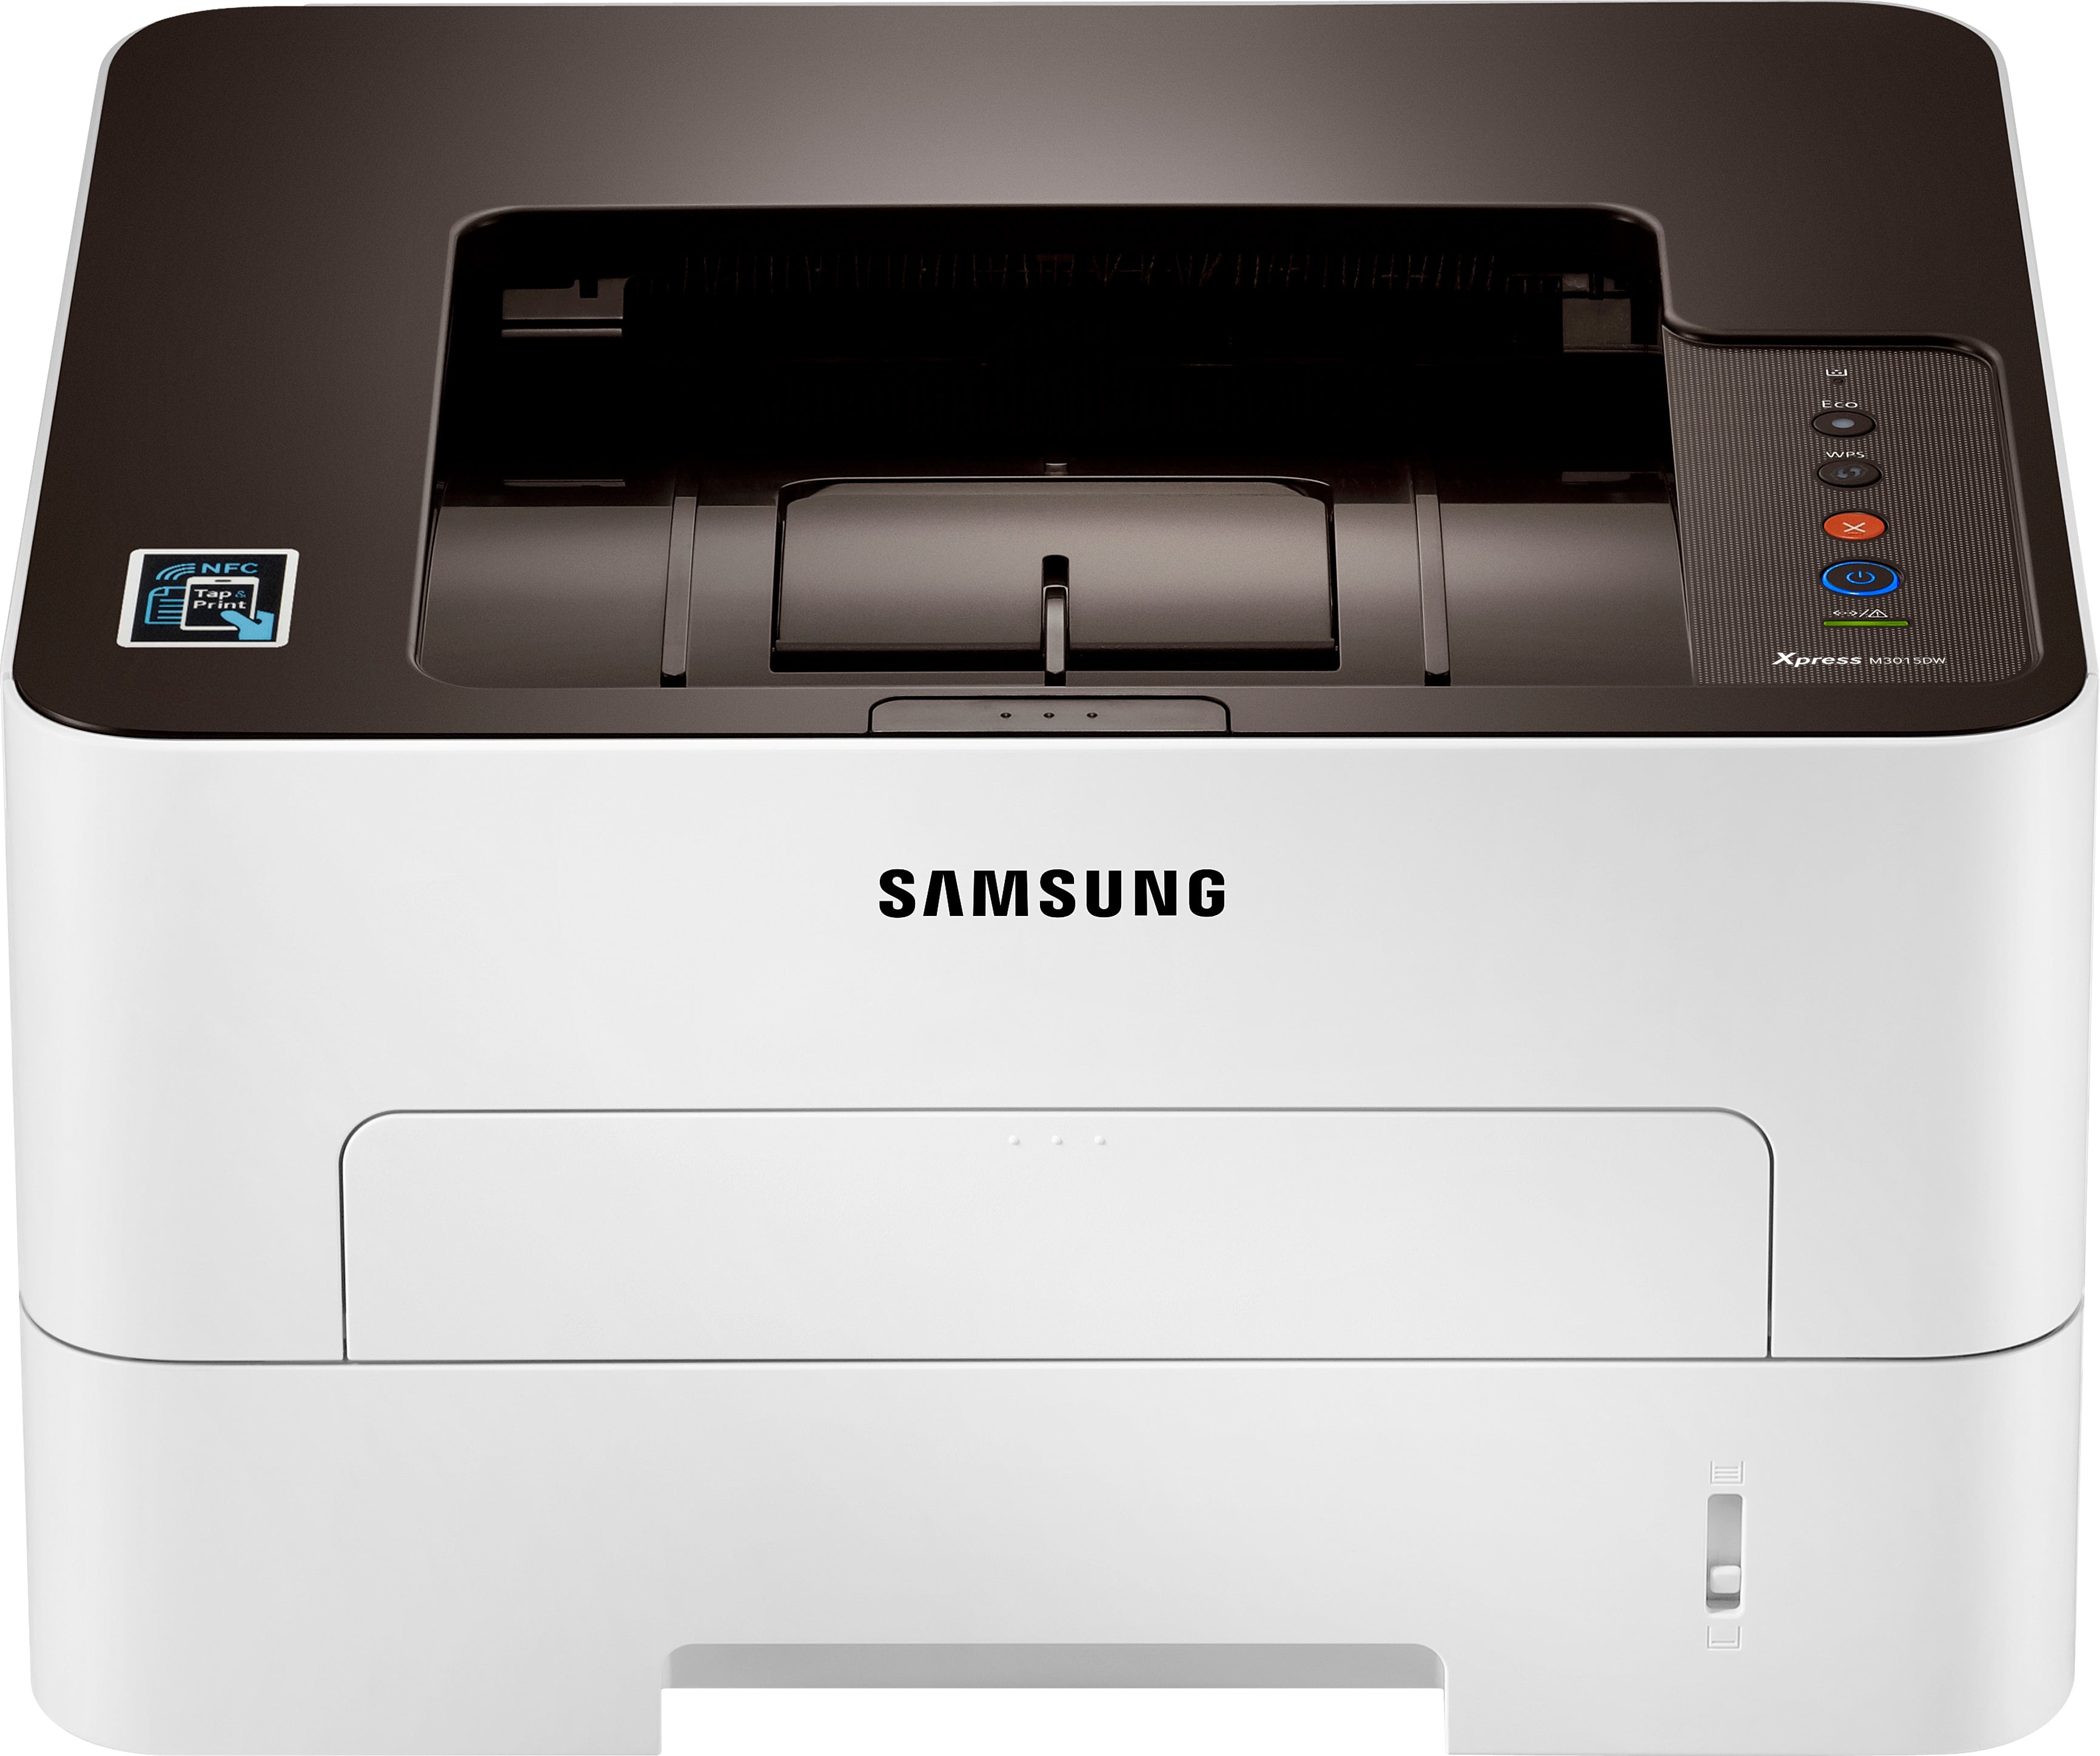 Samsung Printer 